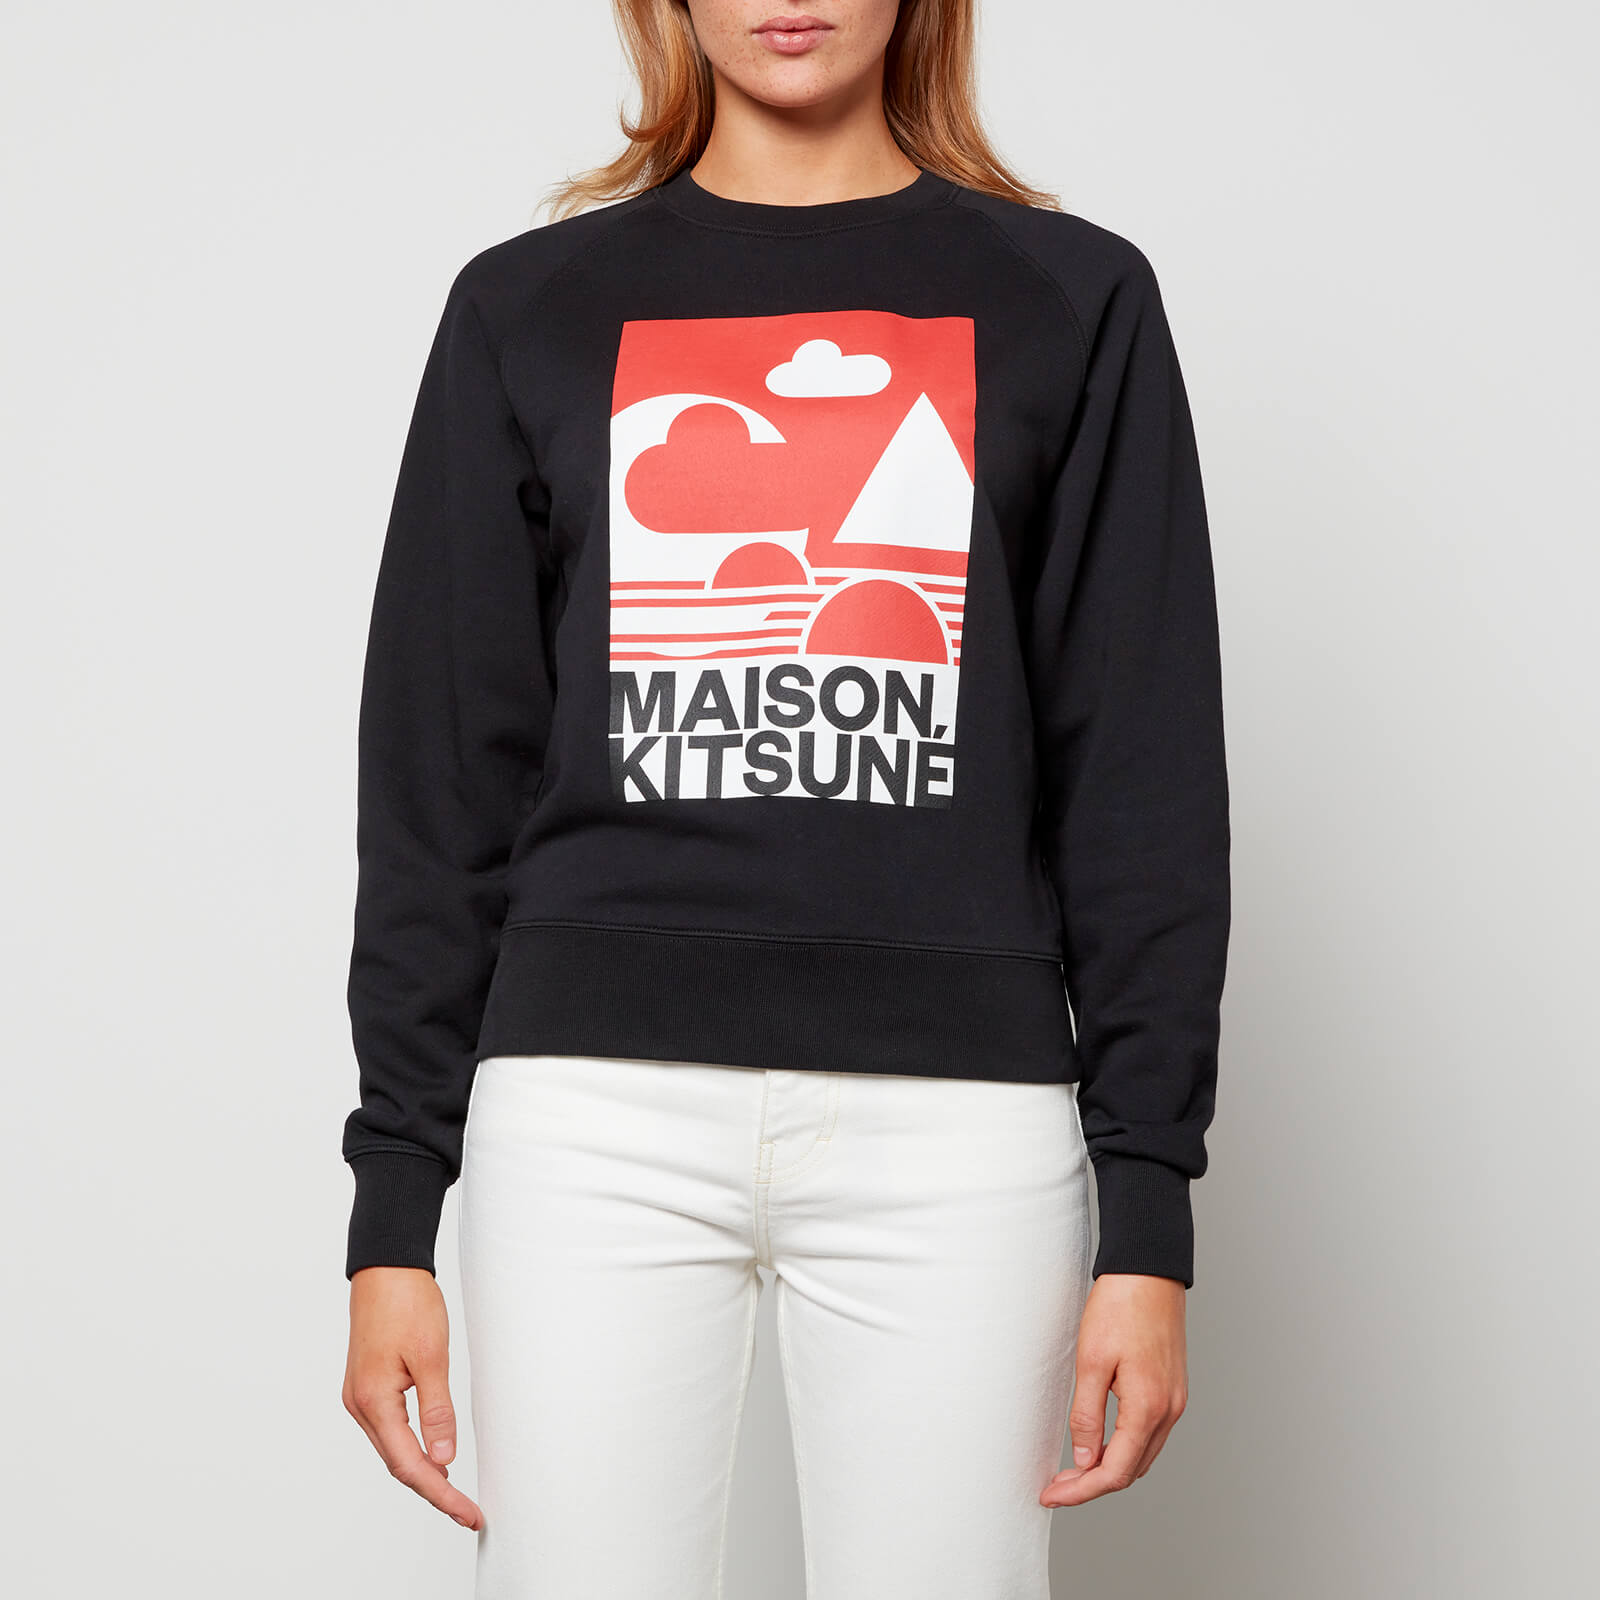 maison kitsuné women's red anthony burrill adjusted sweatshirt - black - xs